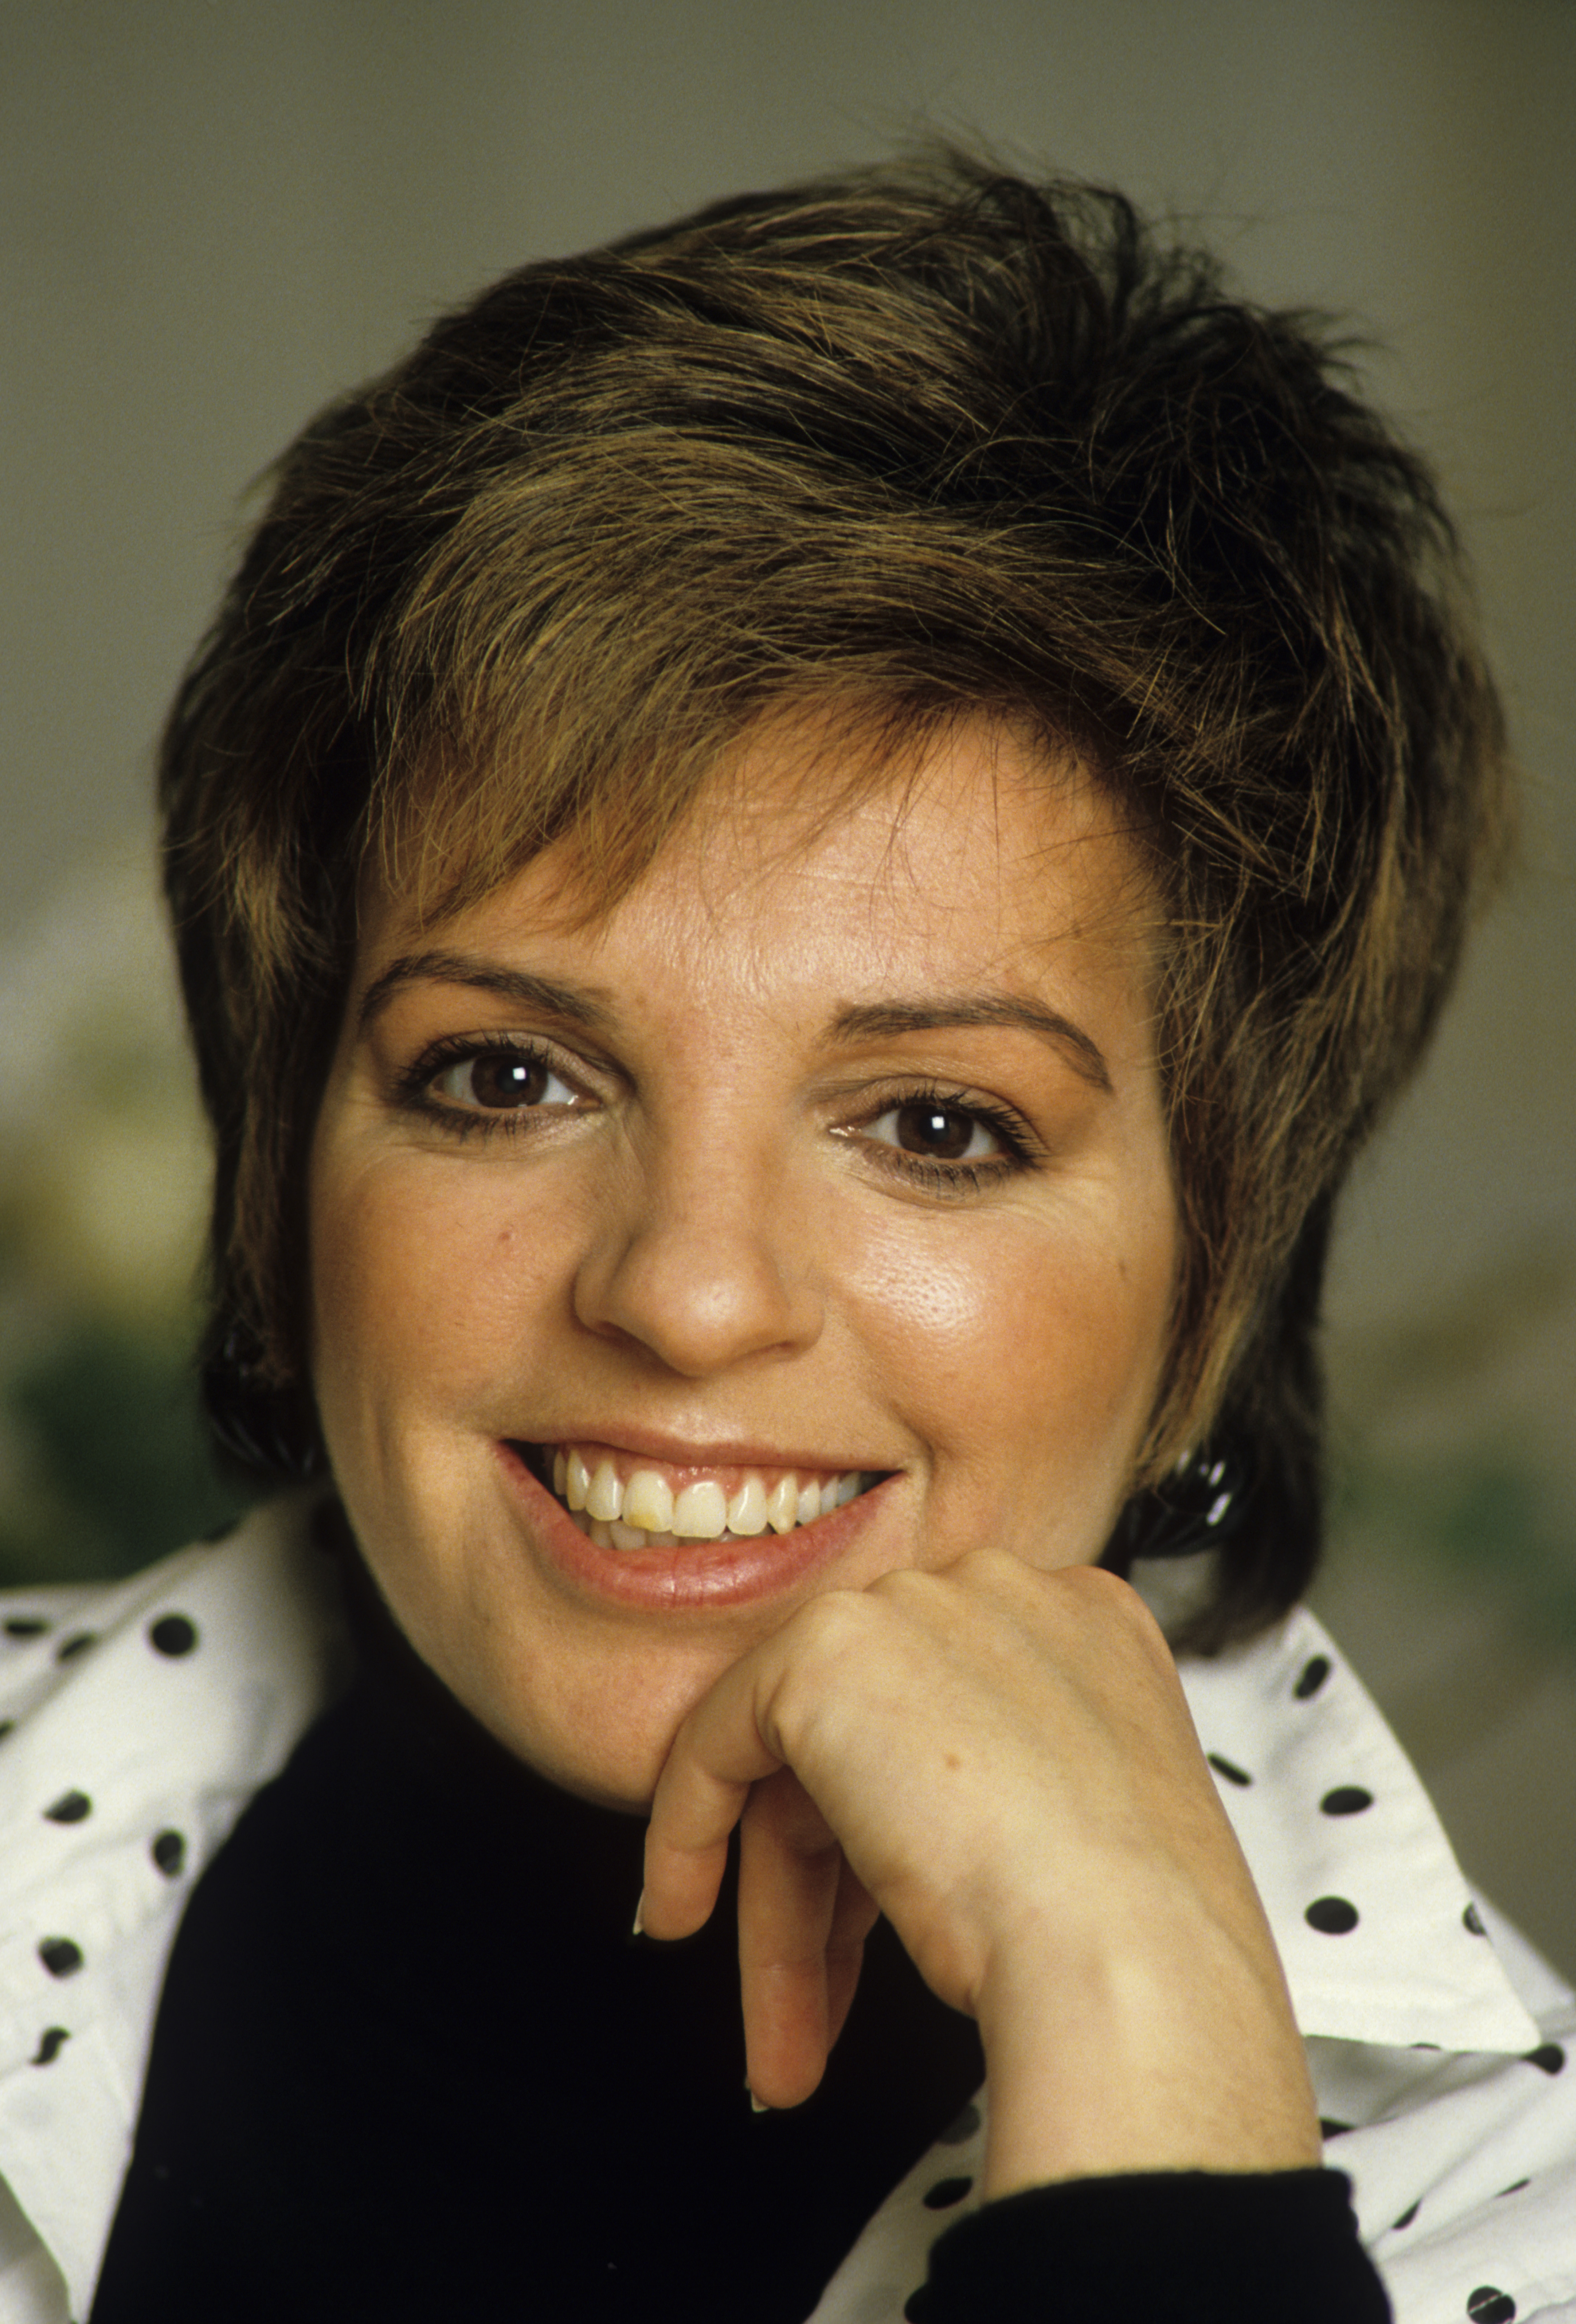 Liza Minnelli pose le 18 mars 1986 à Londres, en Angleterre. | Source : Getty Images